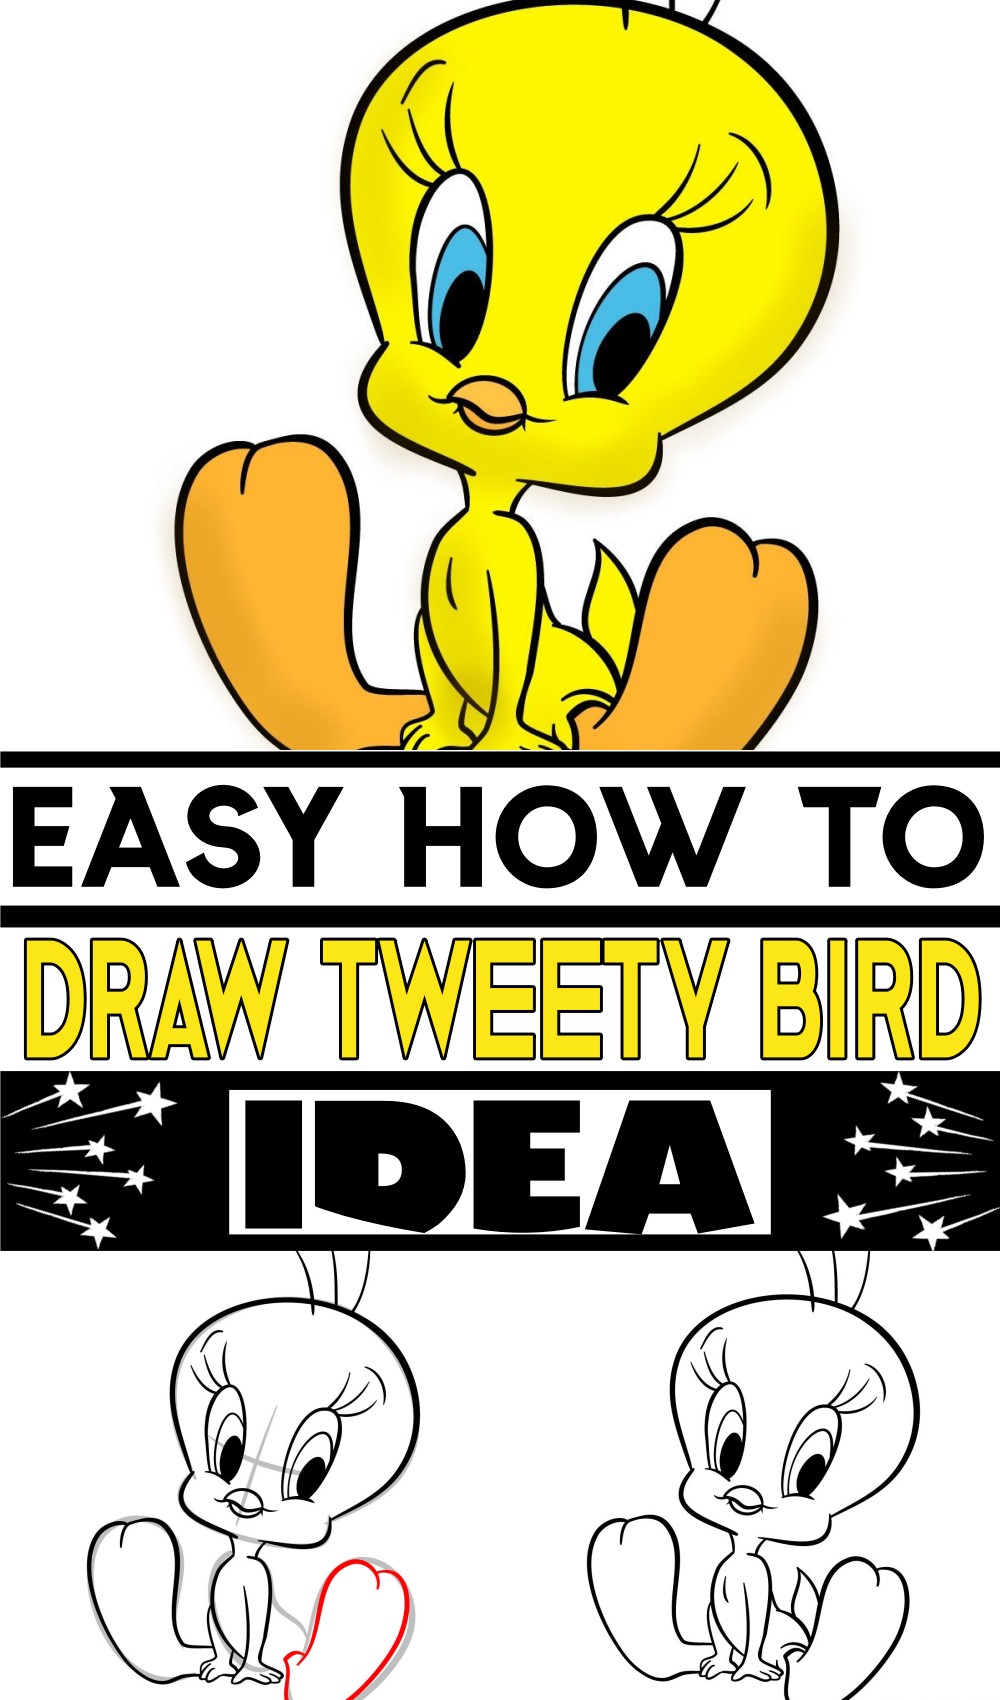 Easy How To Draw Tweety Bird